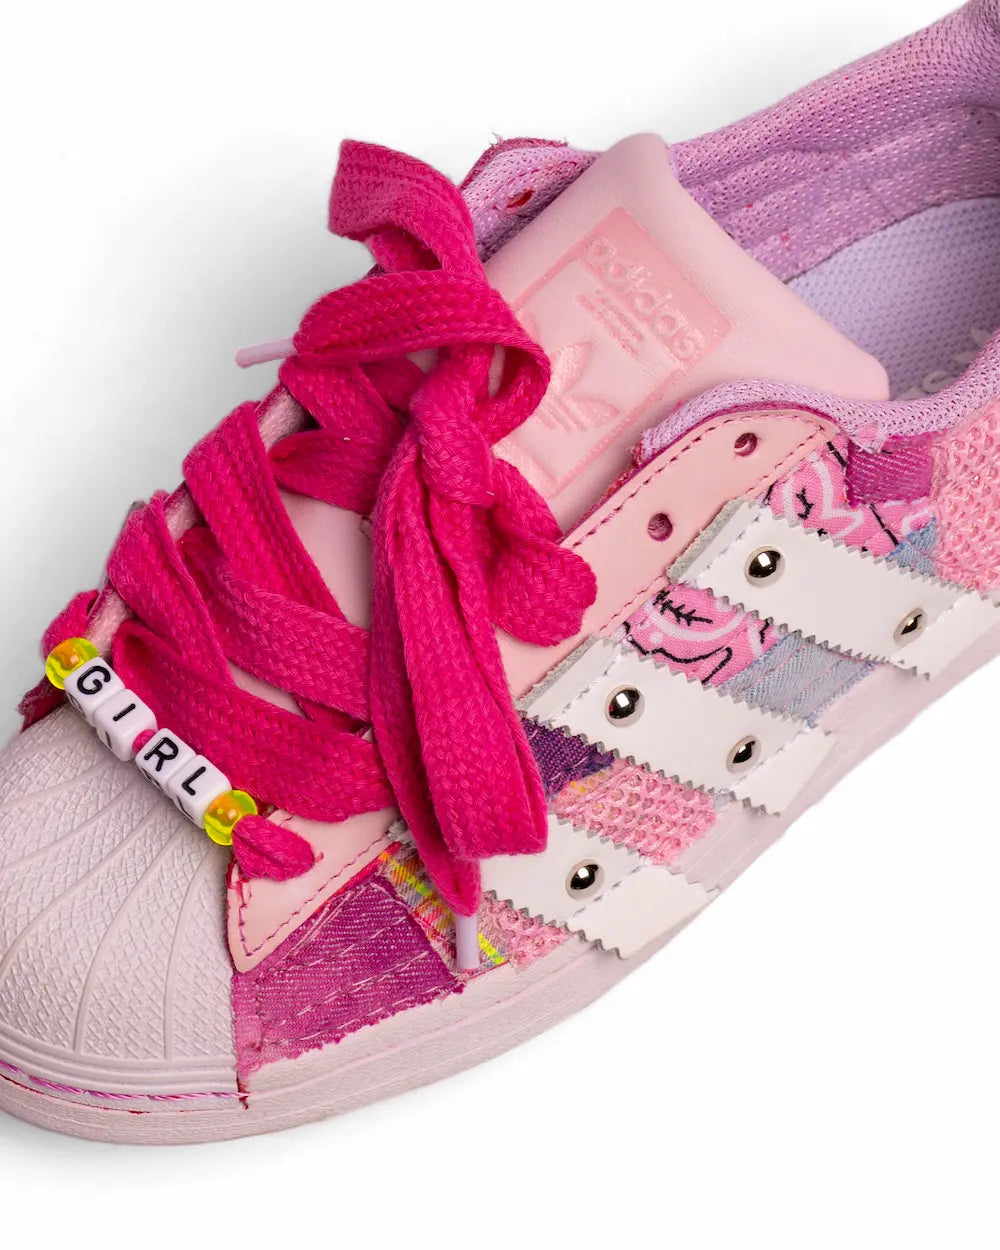 Adidas superstar custom modello Bad Girl, rosa con tessuti effetto patchwork